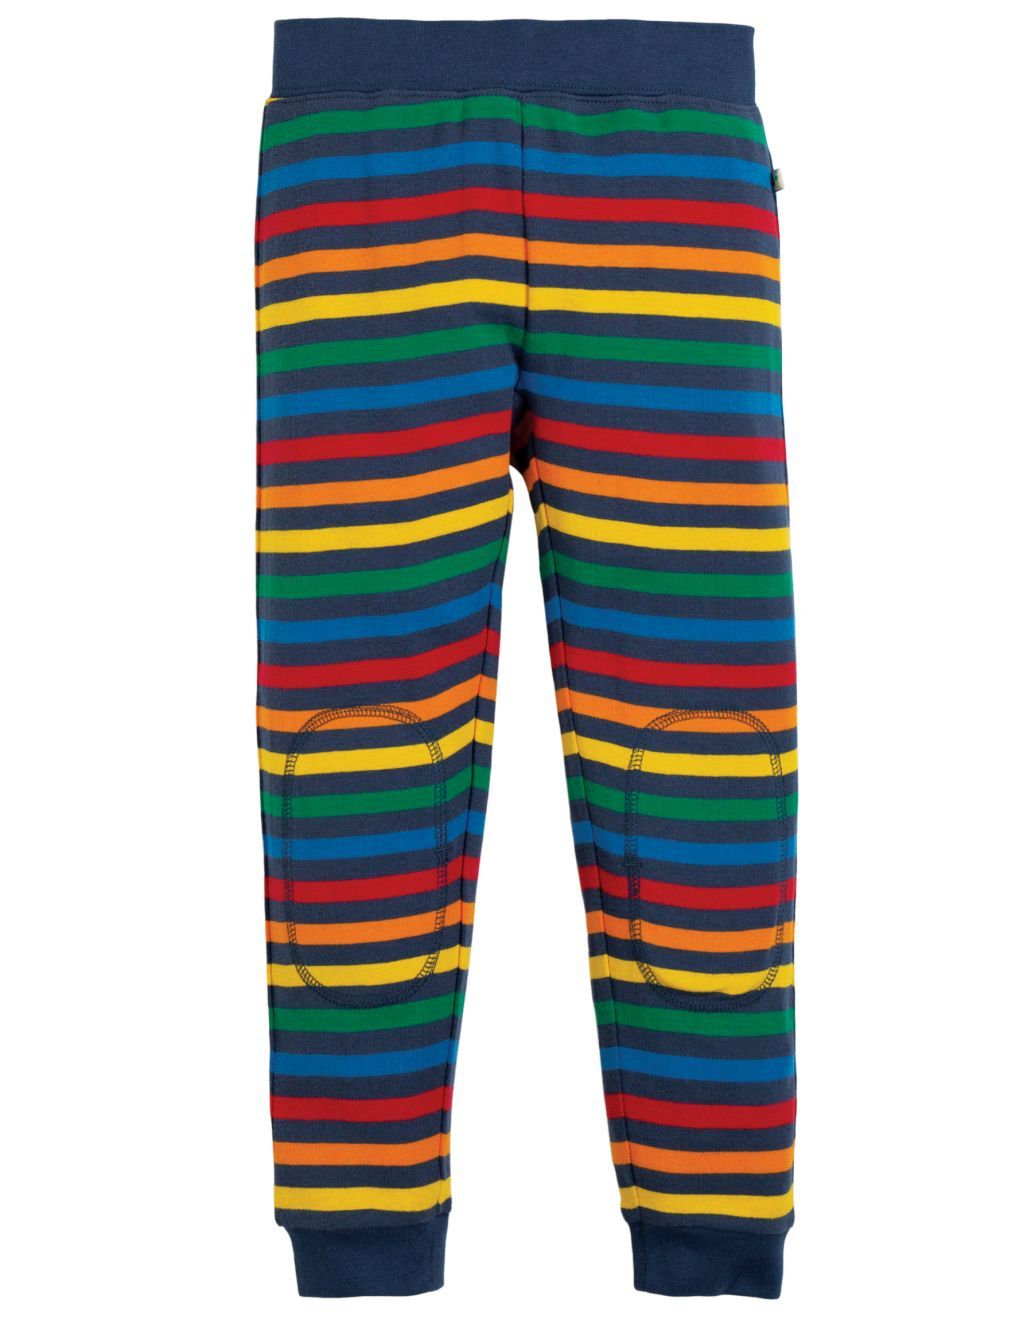 Leap About Cuffed Legging Rainbow Stripe Aw1 92/98